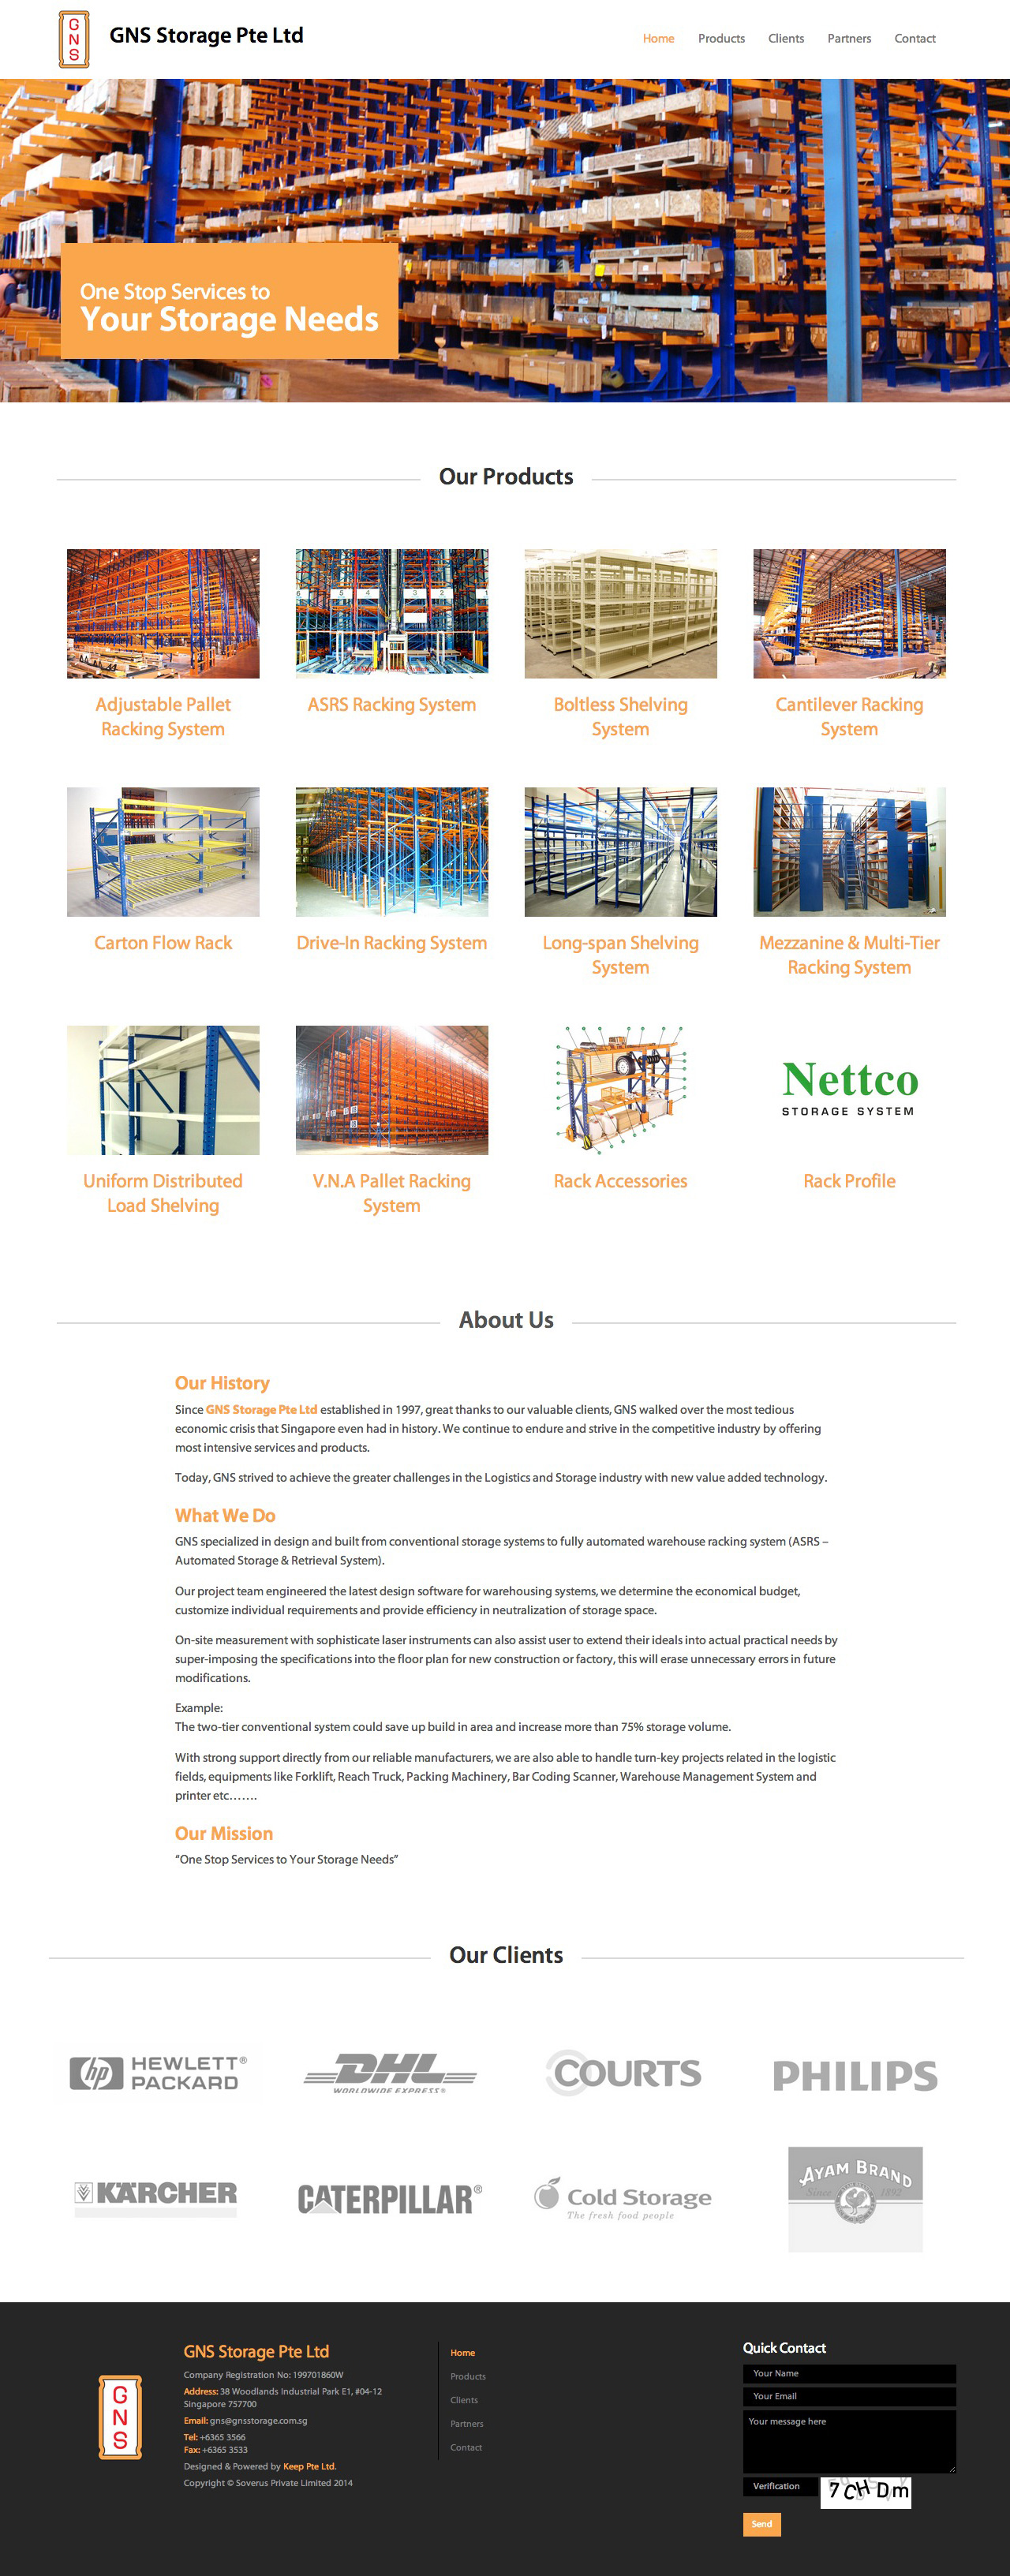 GNS Storage Pte Ltd website home page